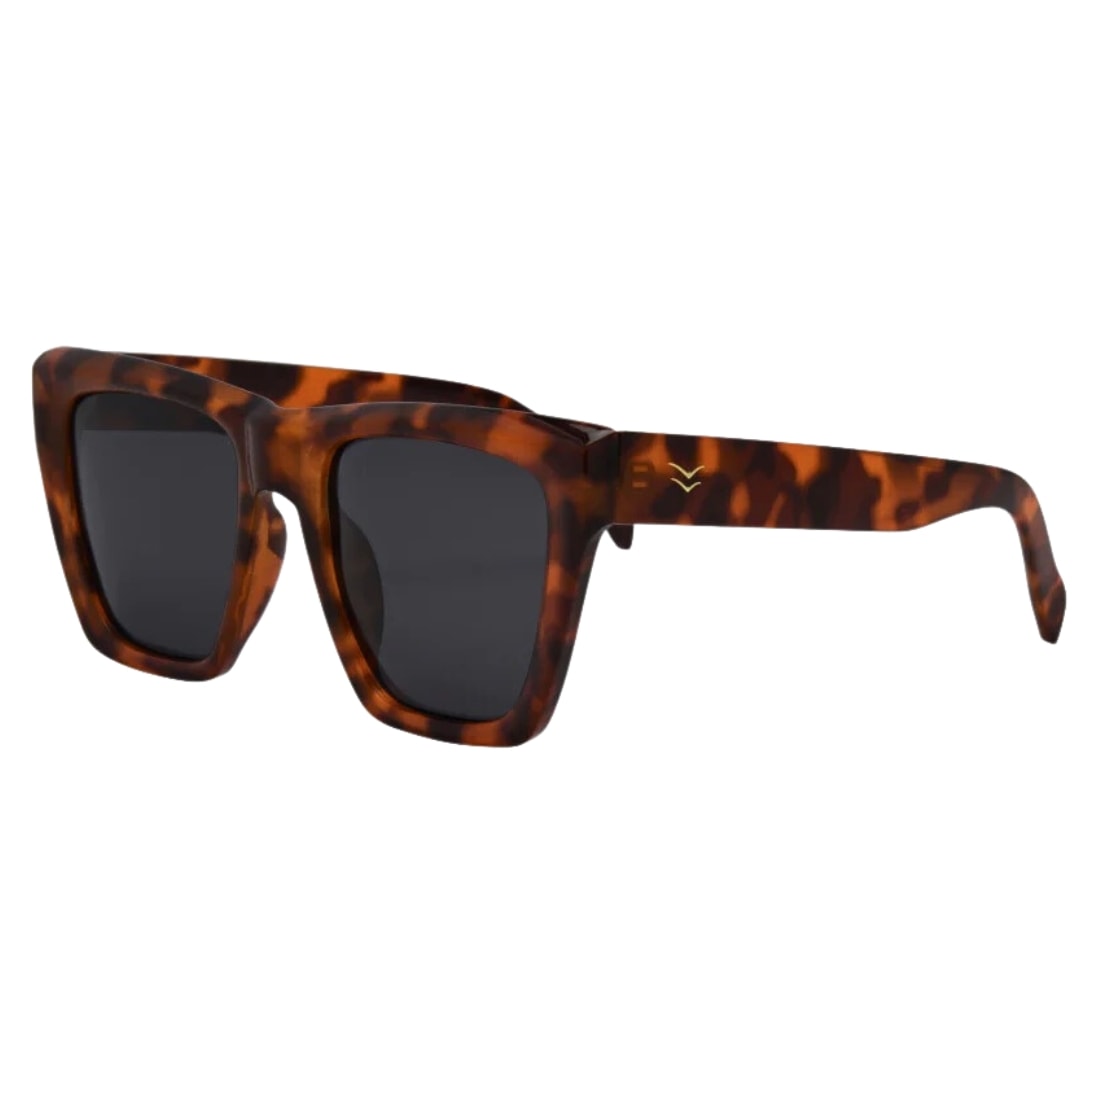 I-Sea Ava Polarised Sunglasses - Tortoise/Smoke Polarized Lens - Square/Rectangular Sunglasses by I-Sea